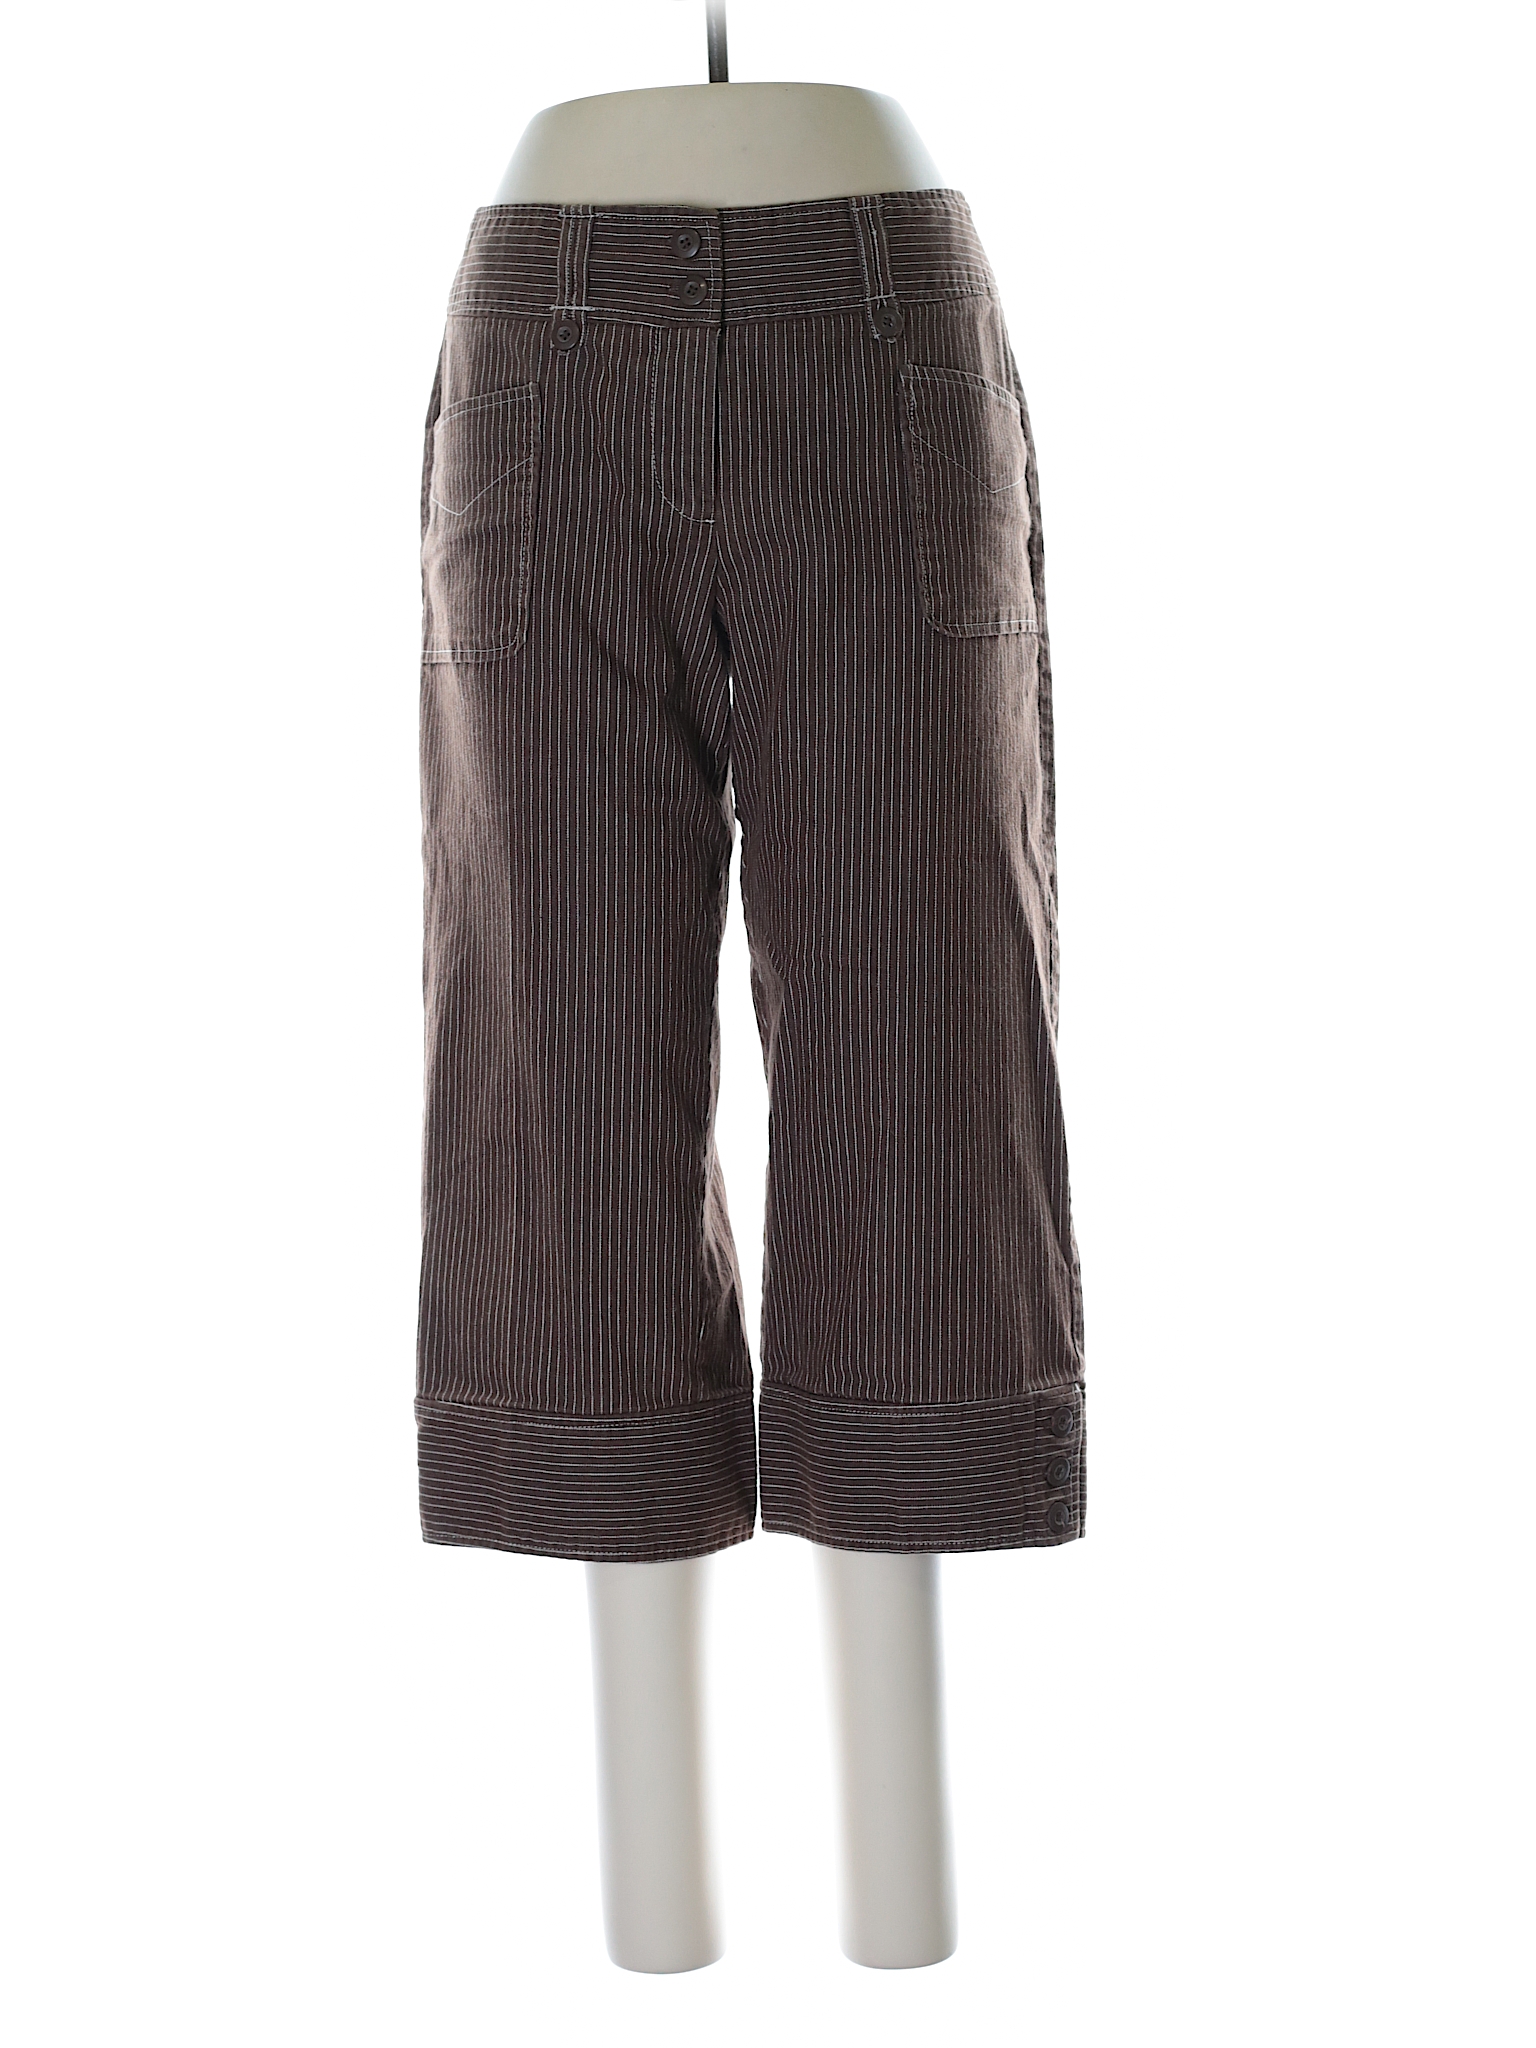 Robert Louis Stripes Brown Dress Pants Size 8 - 81% off | thredUP